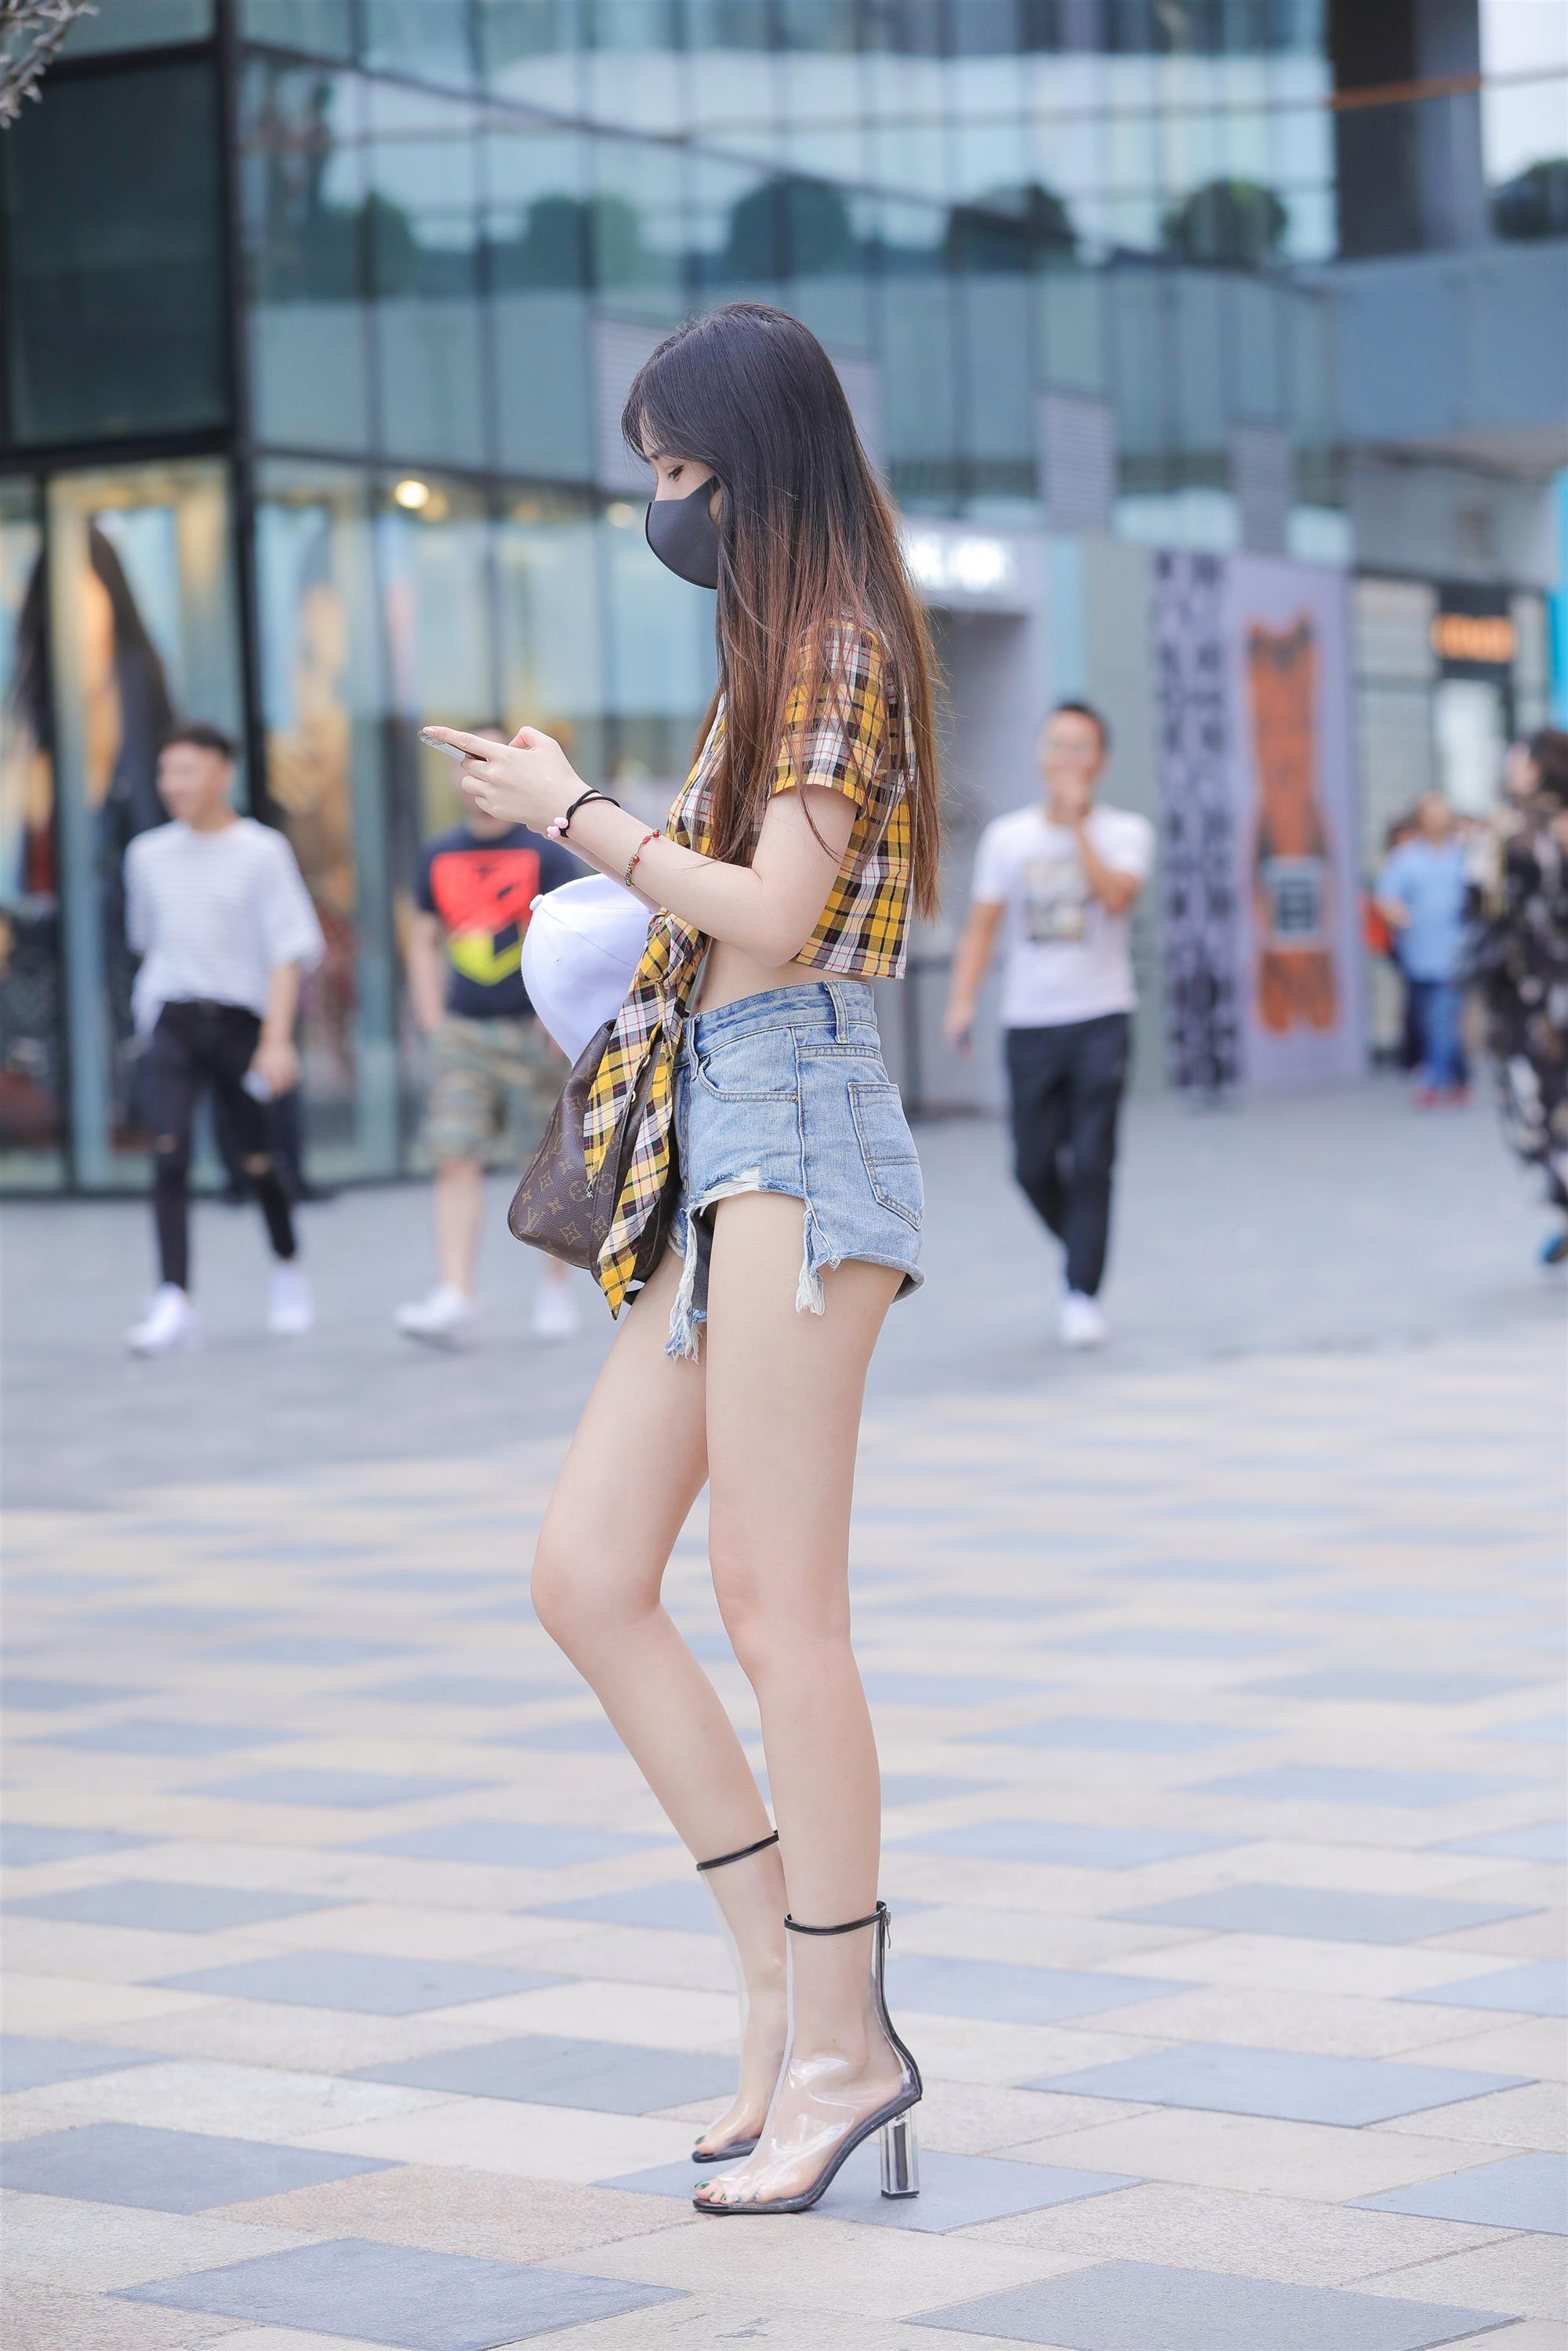 Street Denim shorts and high heels - 26.jpg